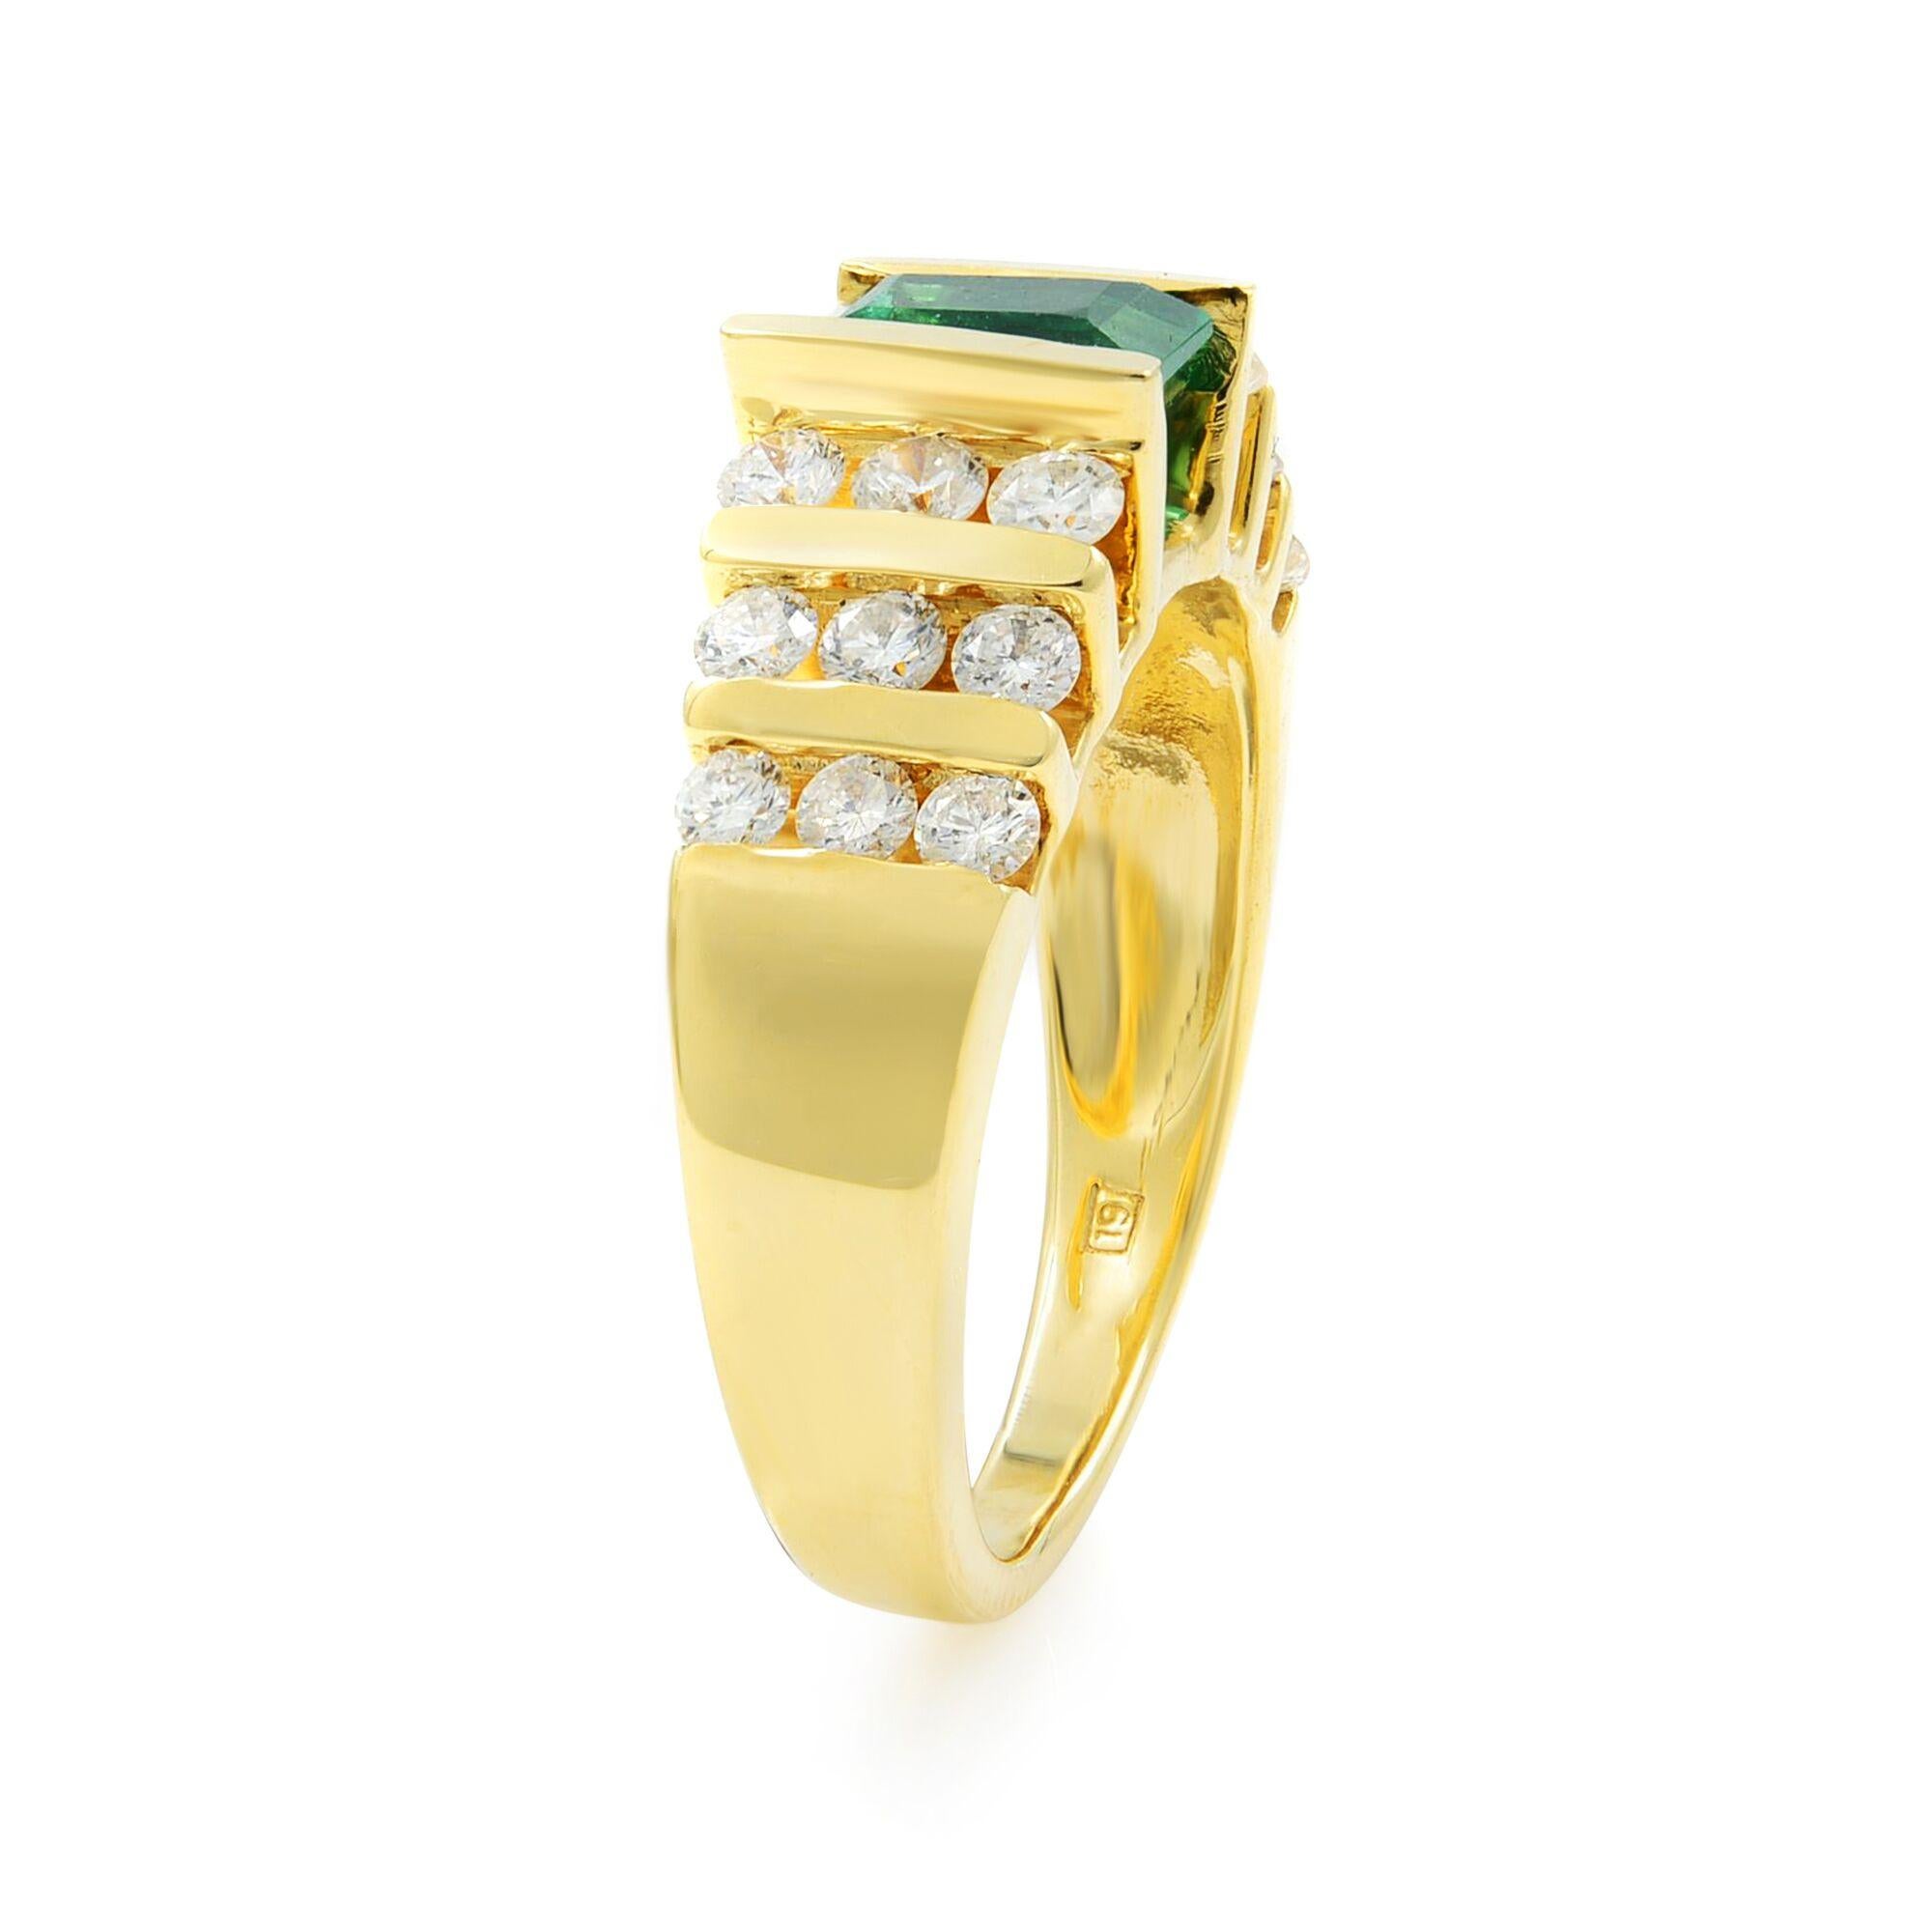 Emerald Cut Rachel Koen Green Emerald and Diamond Ring 18K Yellow Gold 1.00cttw For Sale